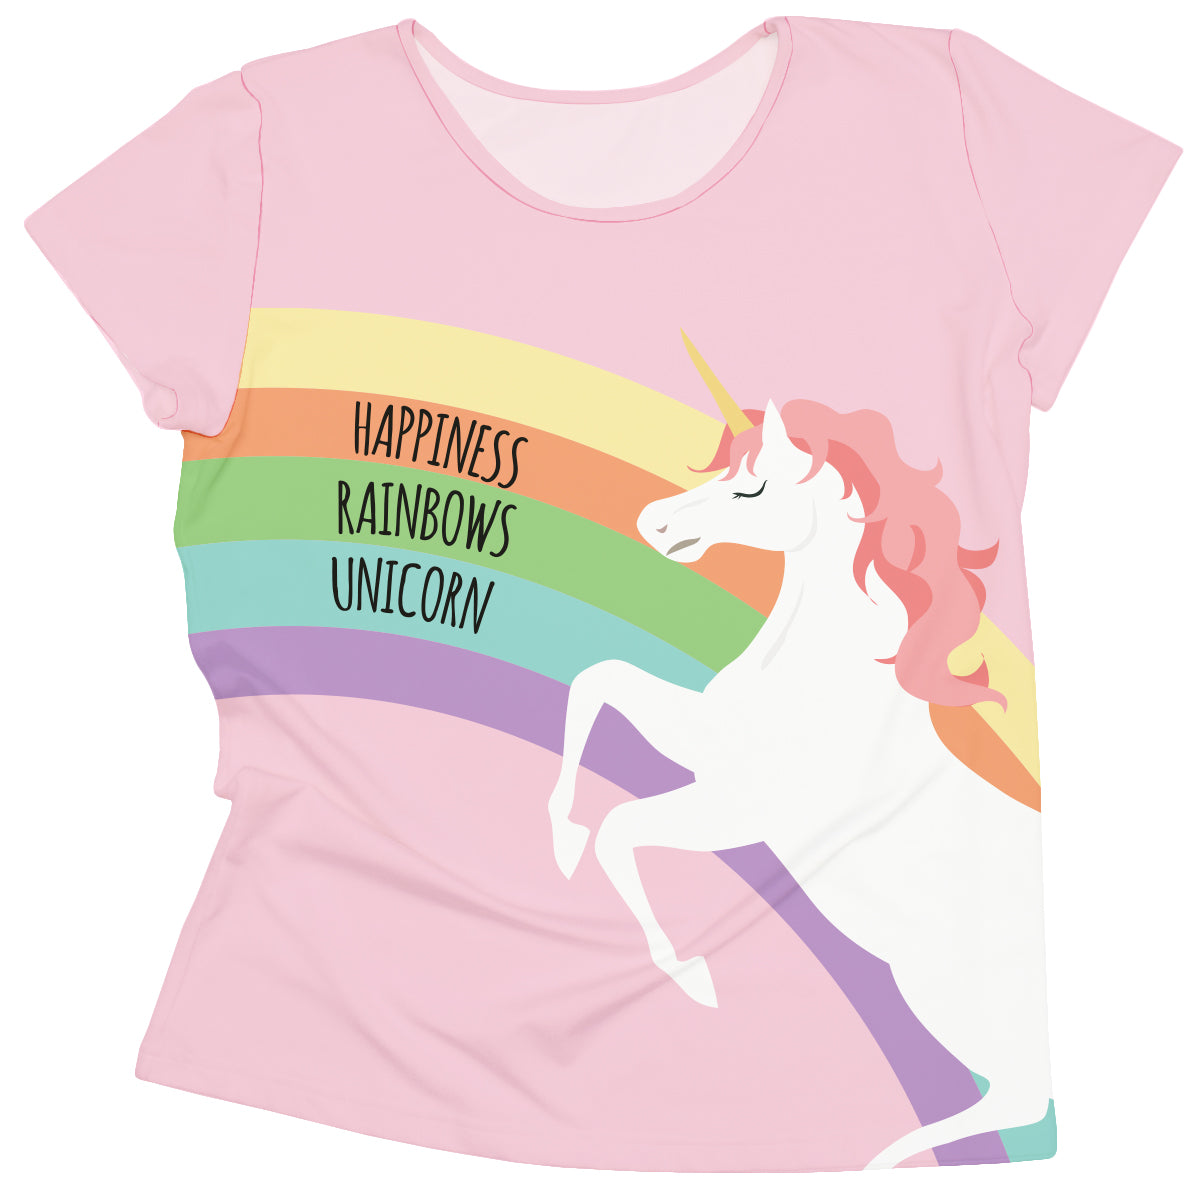 Happiness Rainbows Unicorn Pink Short Sleeve Tee Shirt